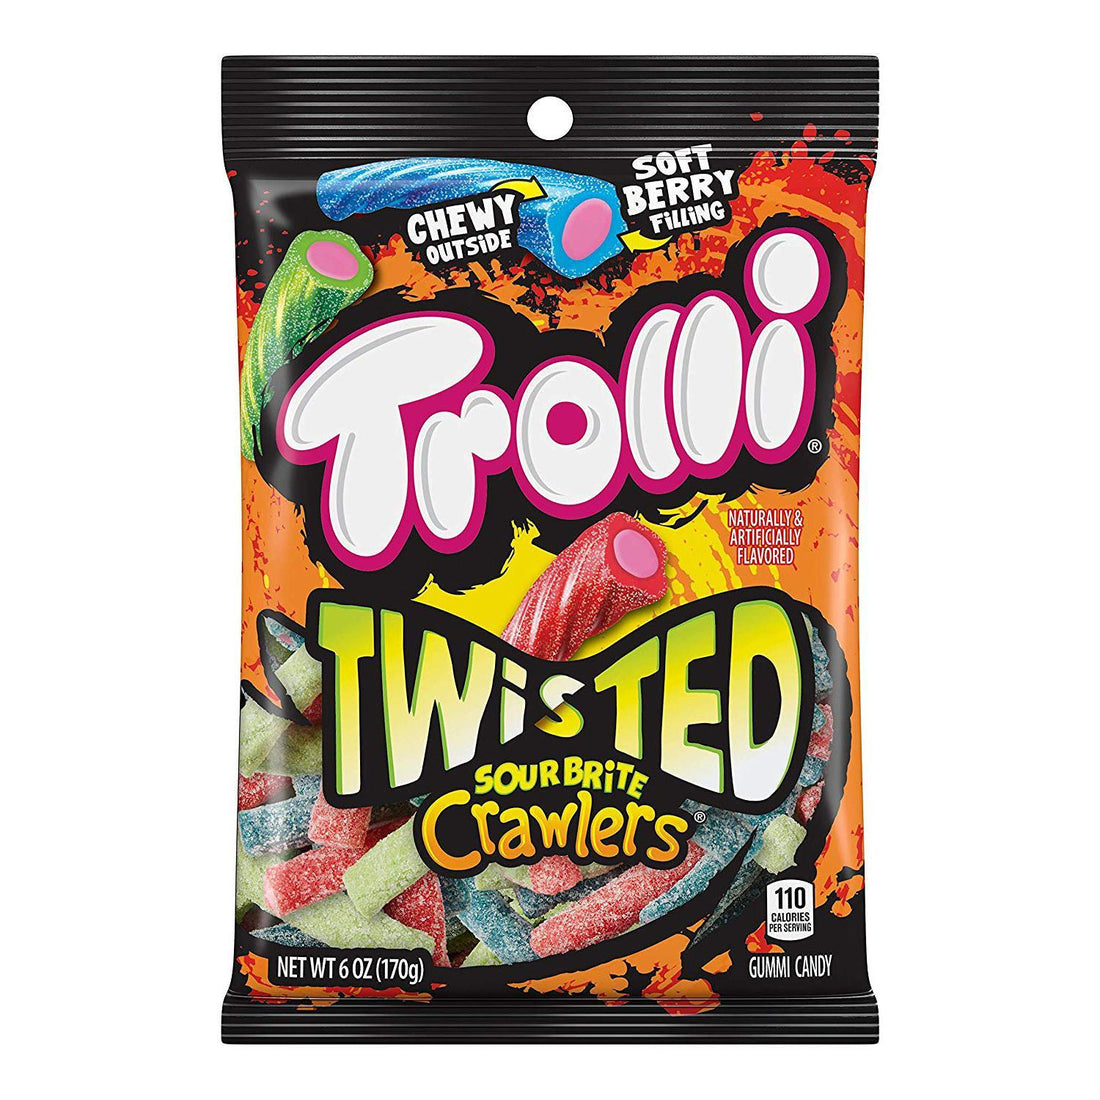 Trolli Twisted Sour Brite Crawlers Gummy Candy: 3LB Box - Candy Warehouse